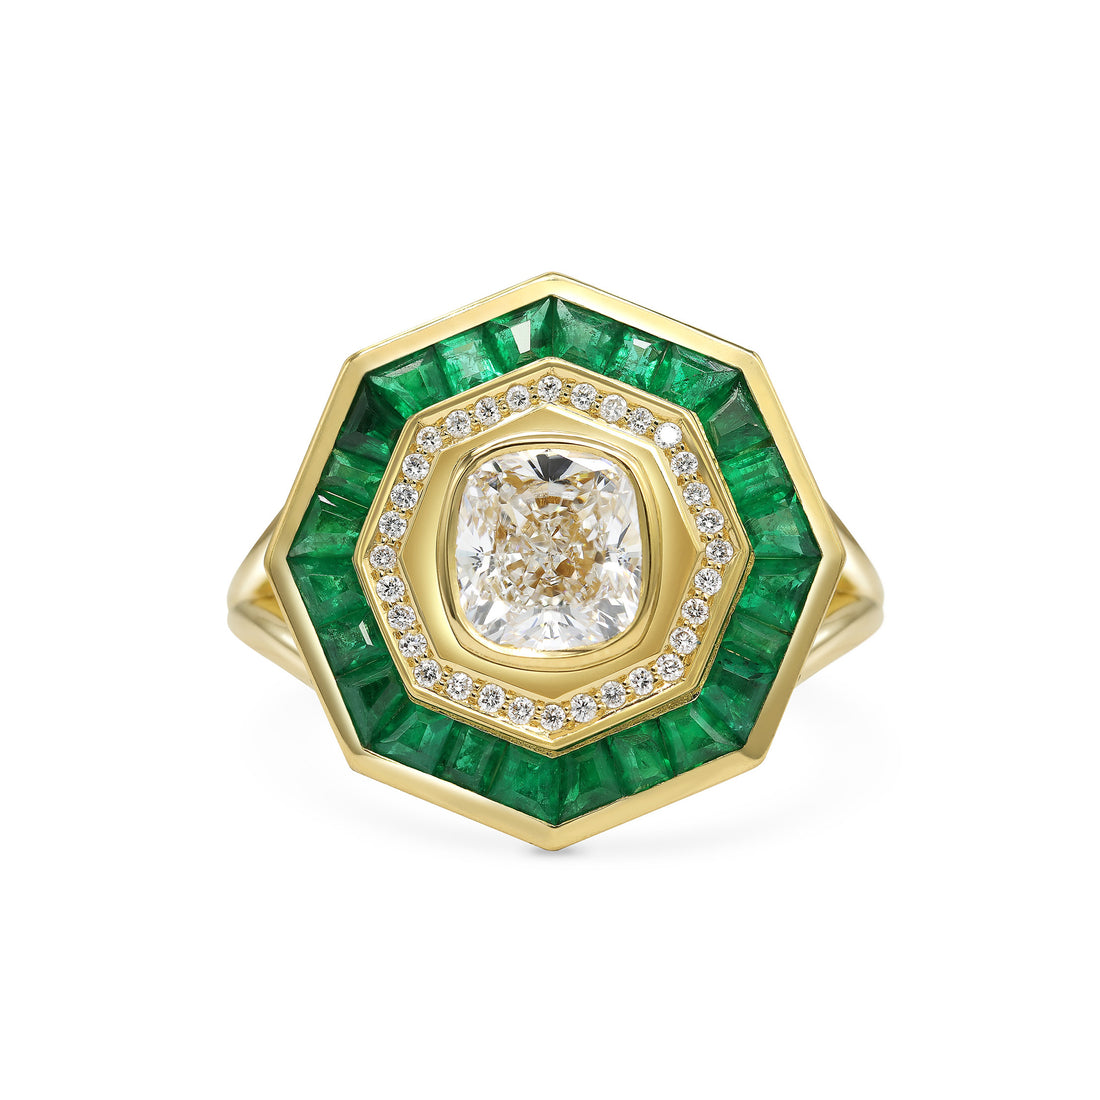  Vintage Style Emerald & Diamond Bespoke Ring by Rachel Boston | The Cut London